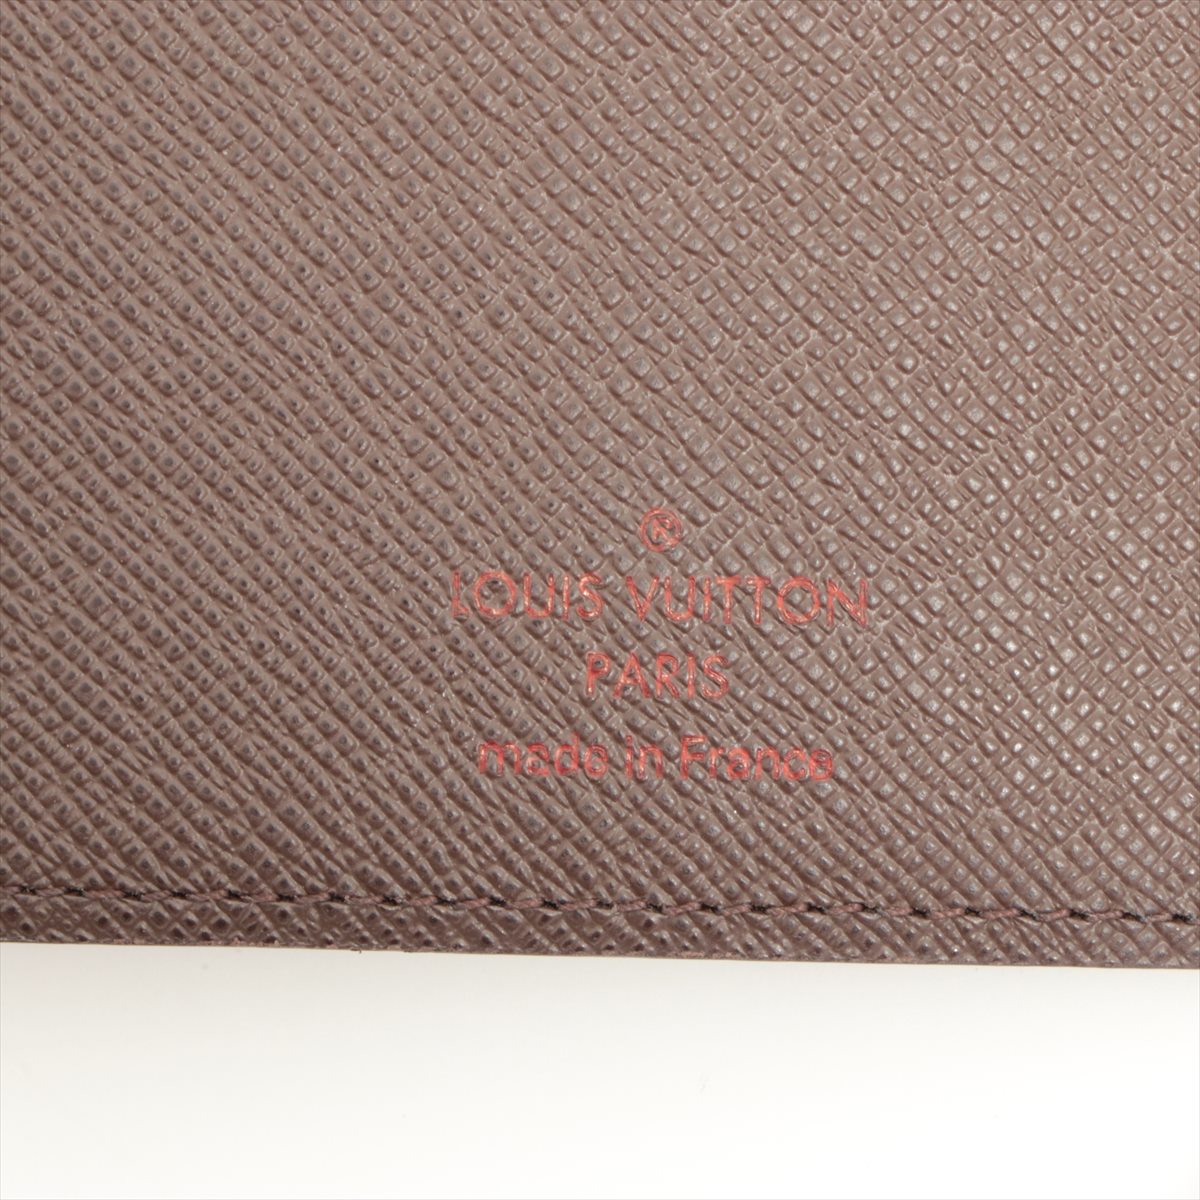 Louis Vuitton agenda mm damier ebene Newer model with 2 screw